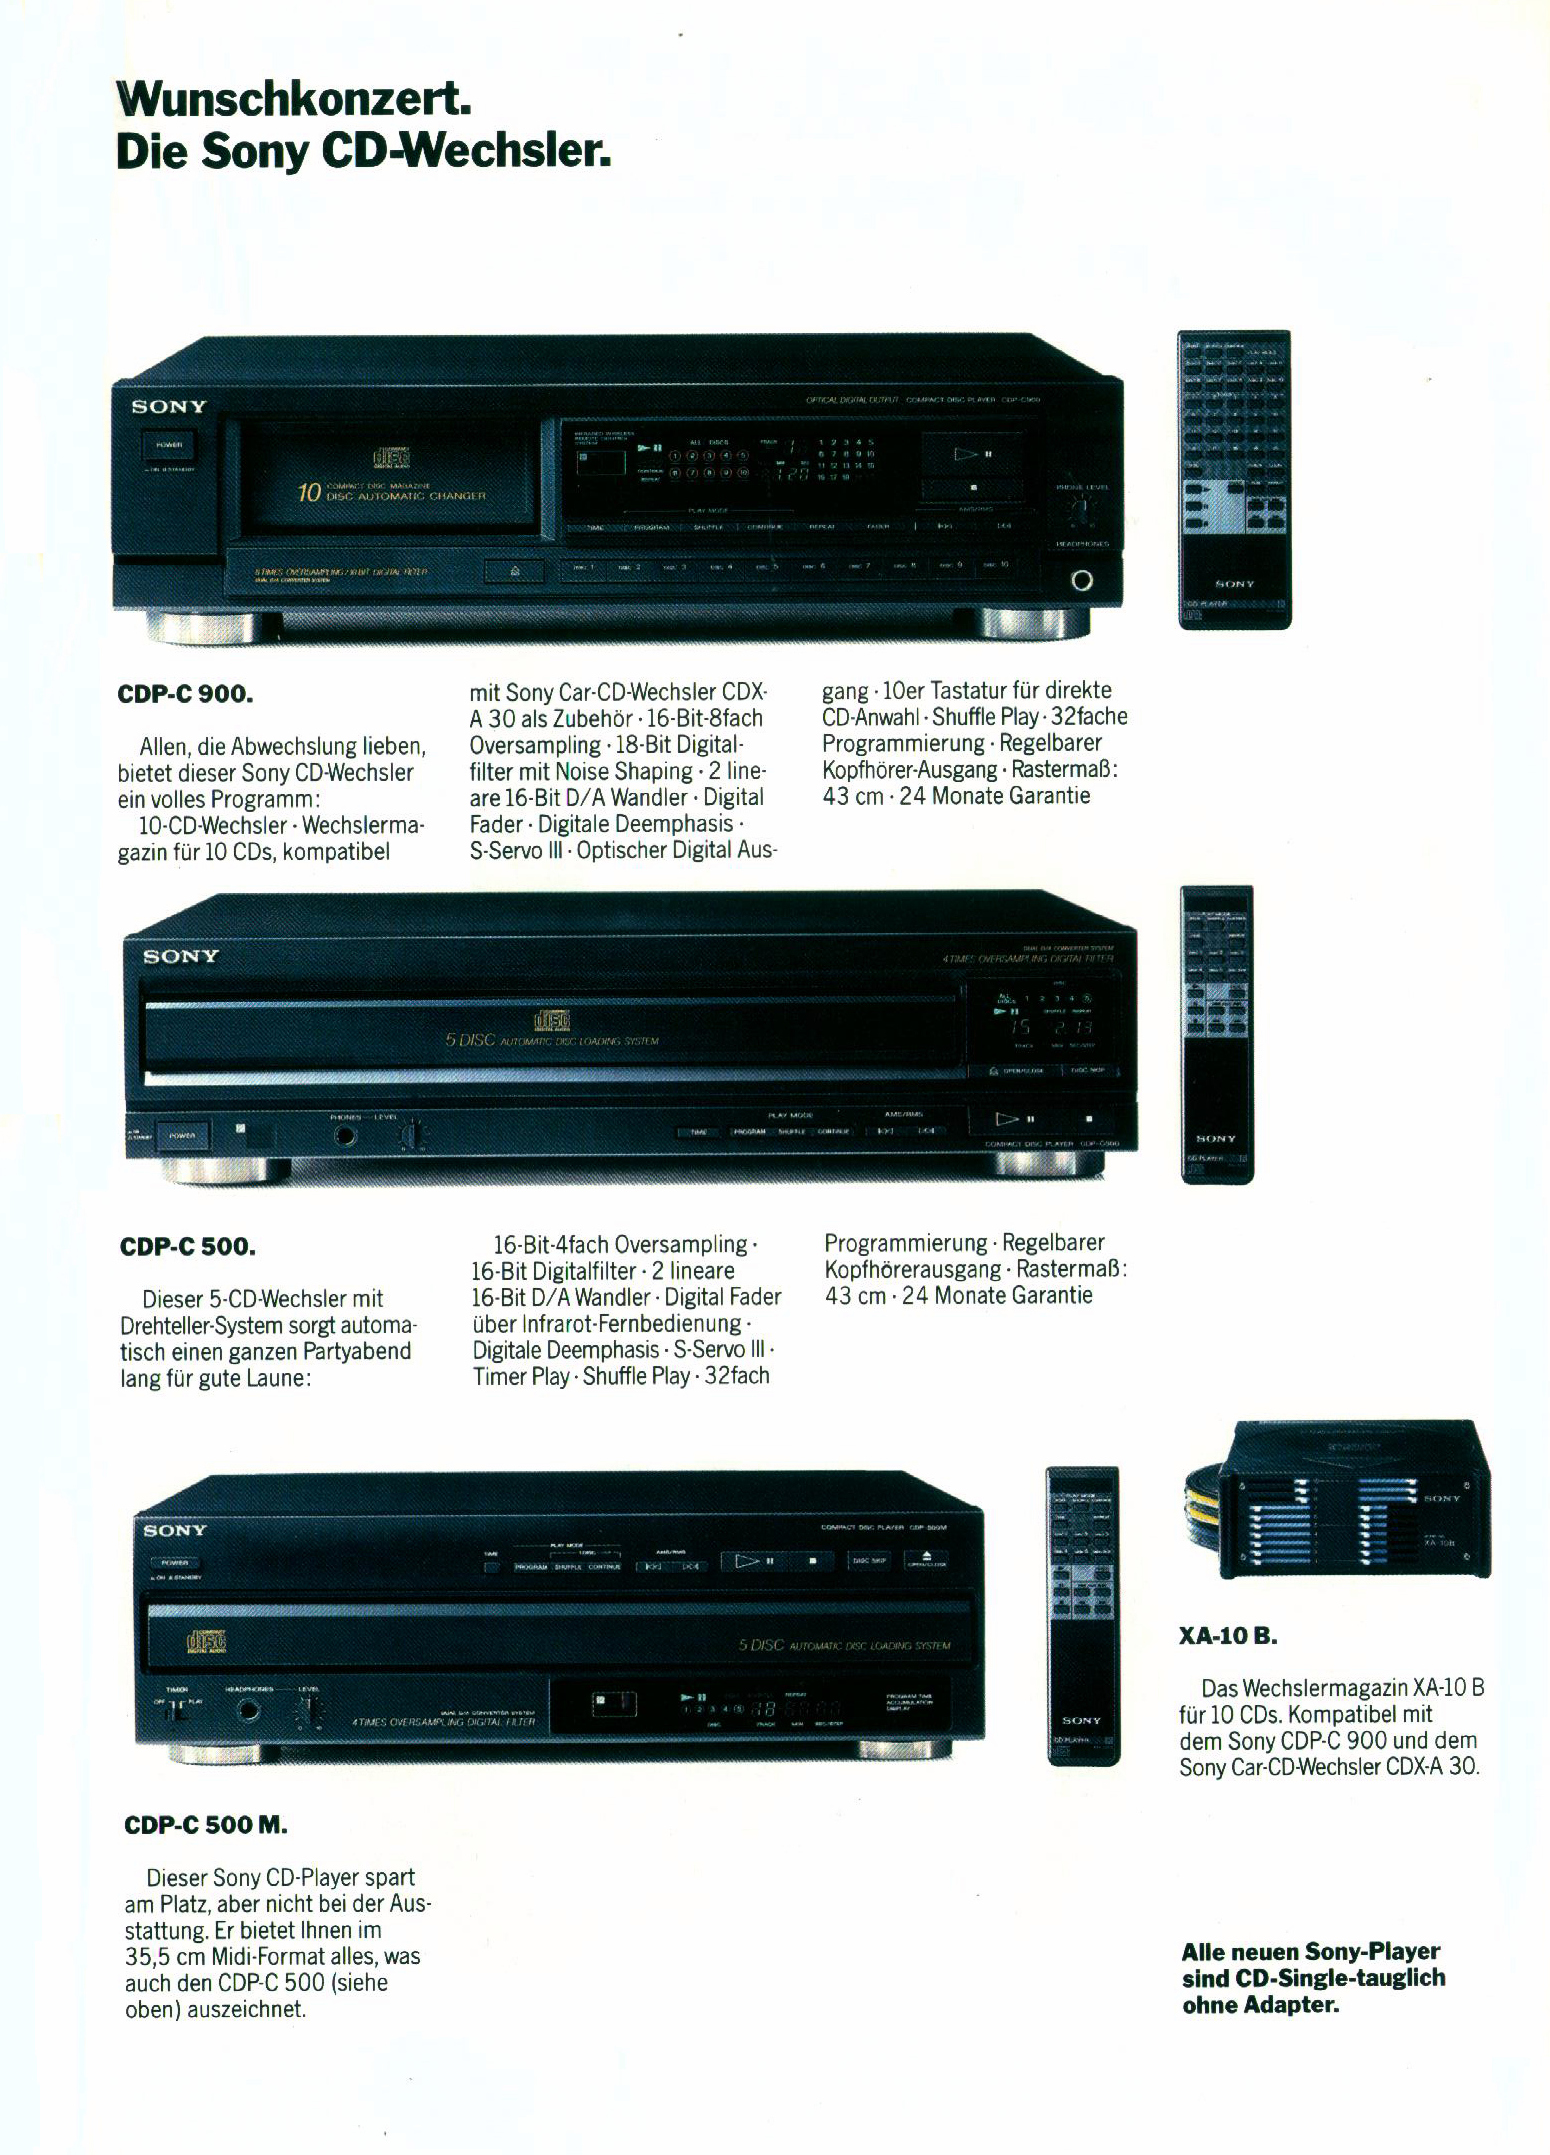 Sony CDP-C 500-500 M-900-Prospekt-1989.jpg